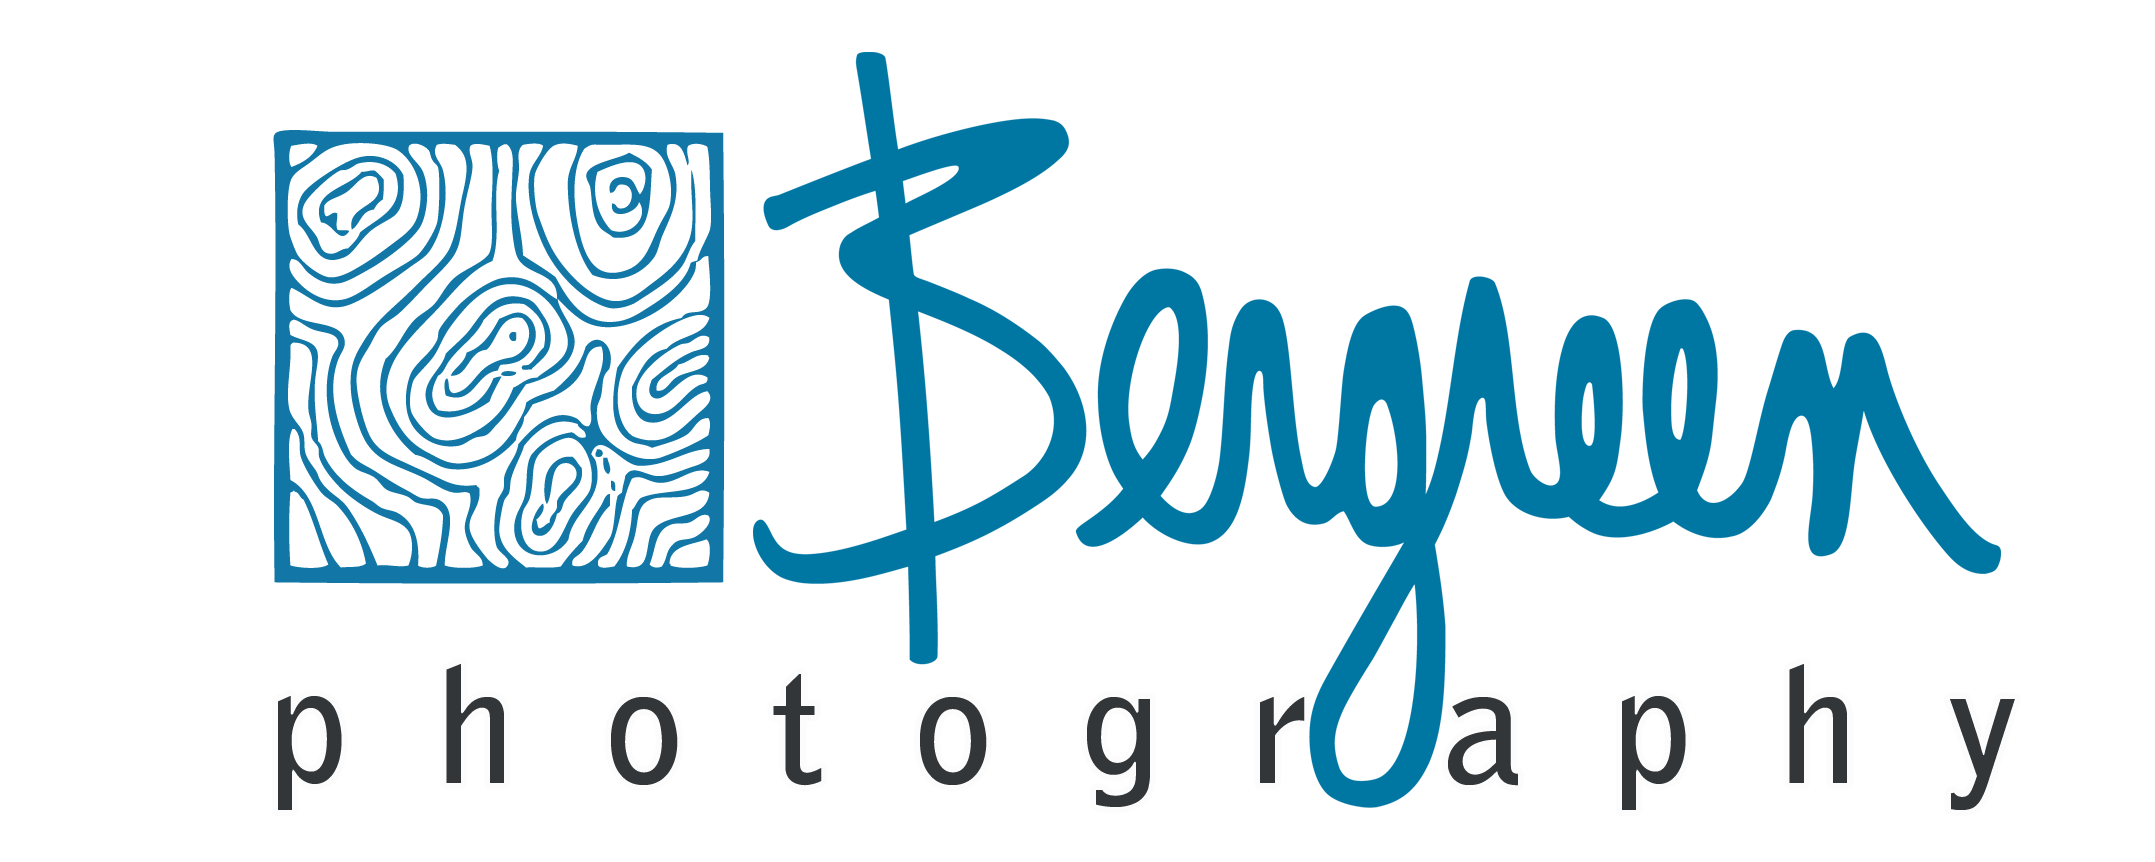 bergreen photography logo